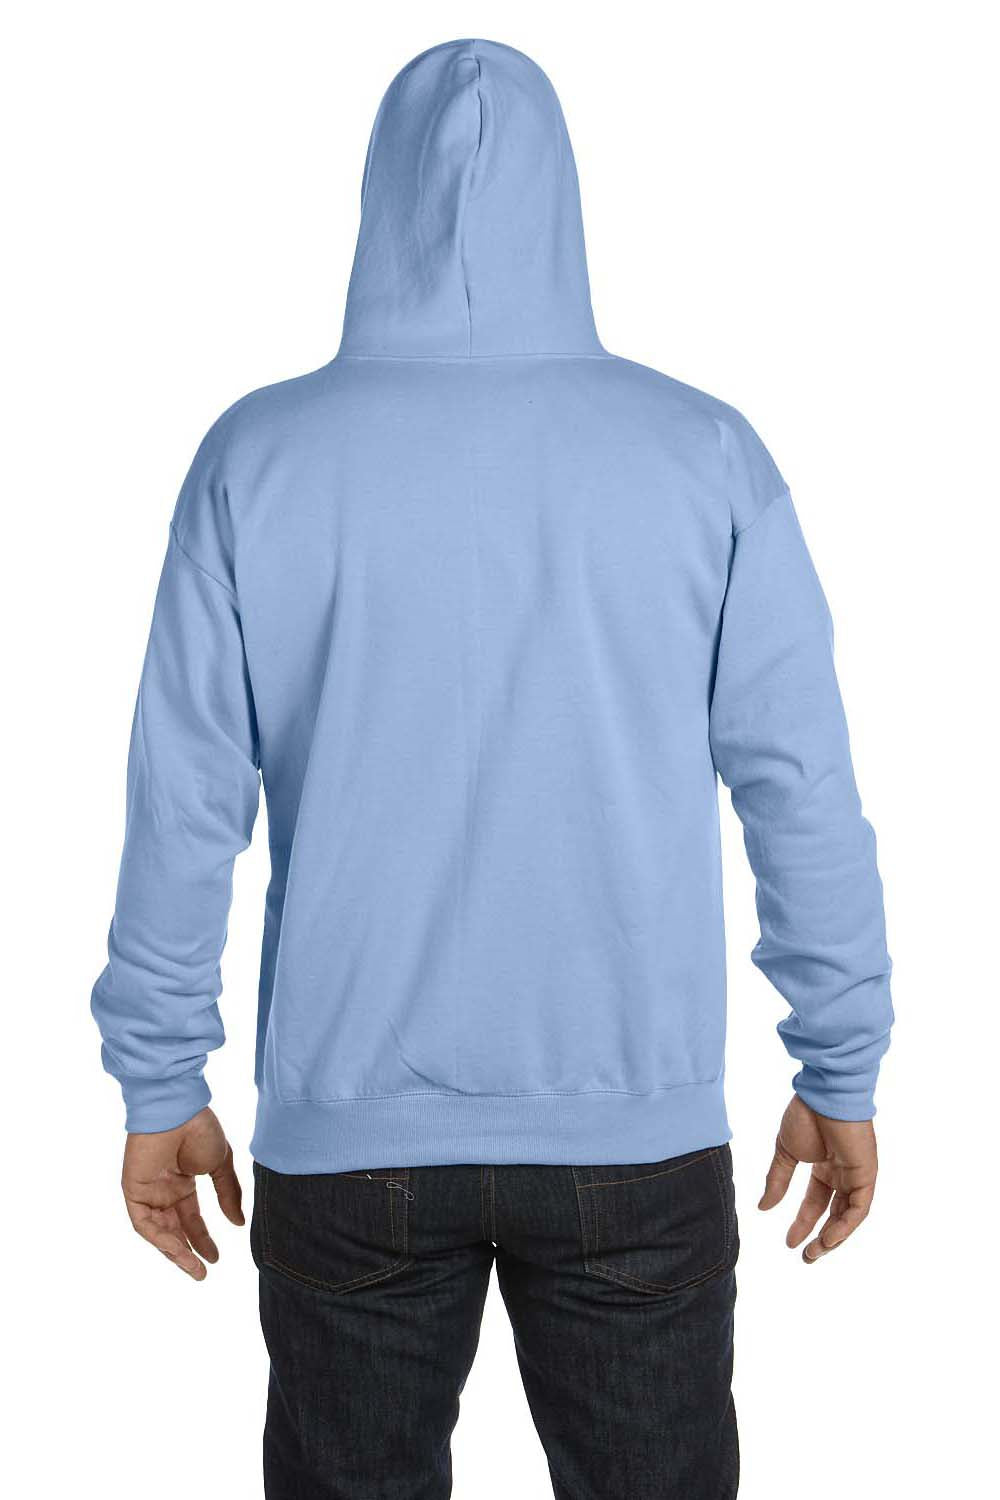 Hanes P180 Mens EcoSmart Print Pro XP Full Zip Hooded Sweatshirt Hoodie Light Blue Back